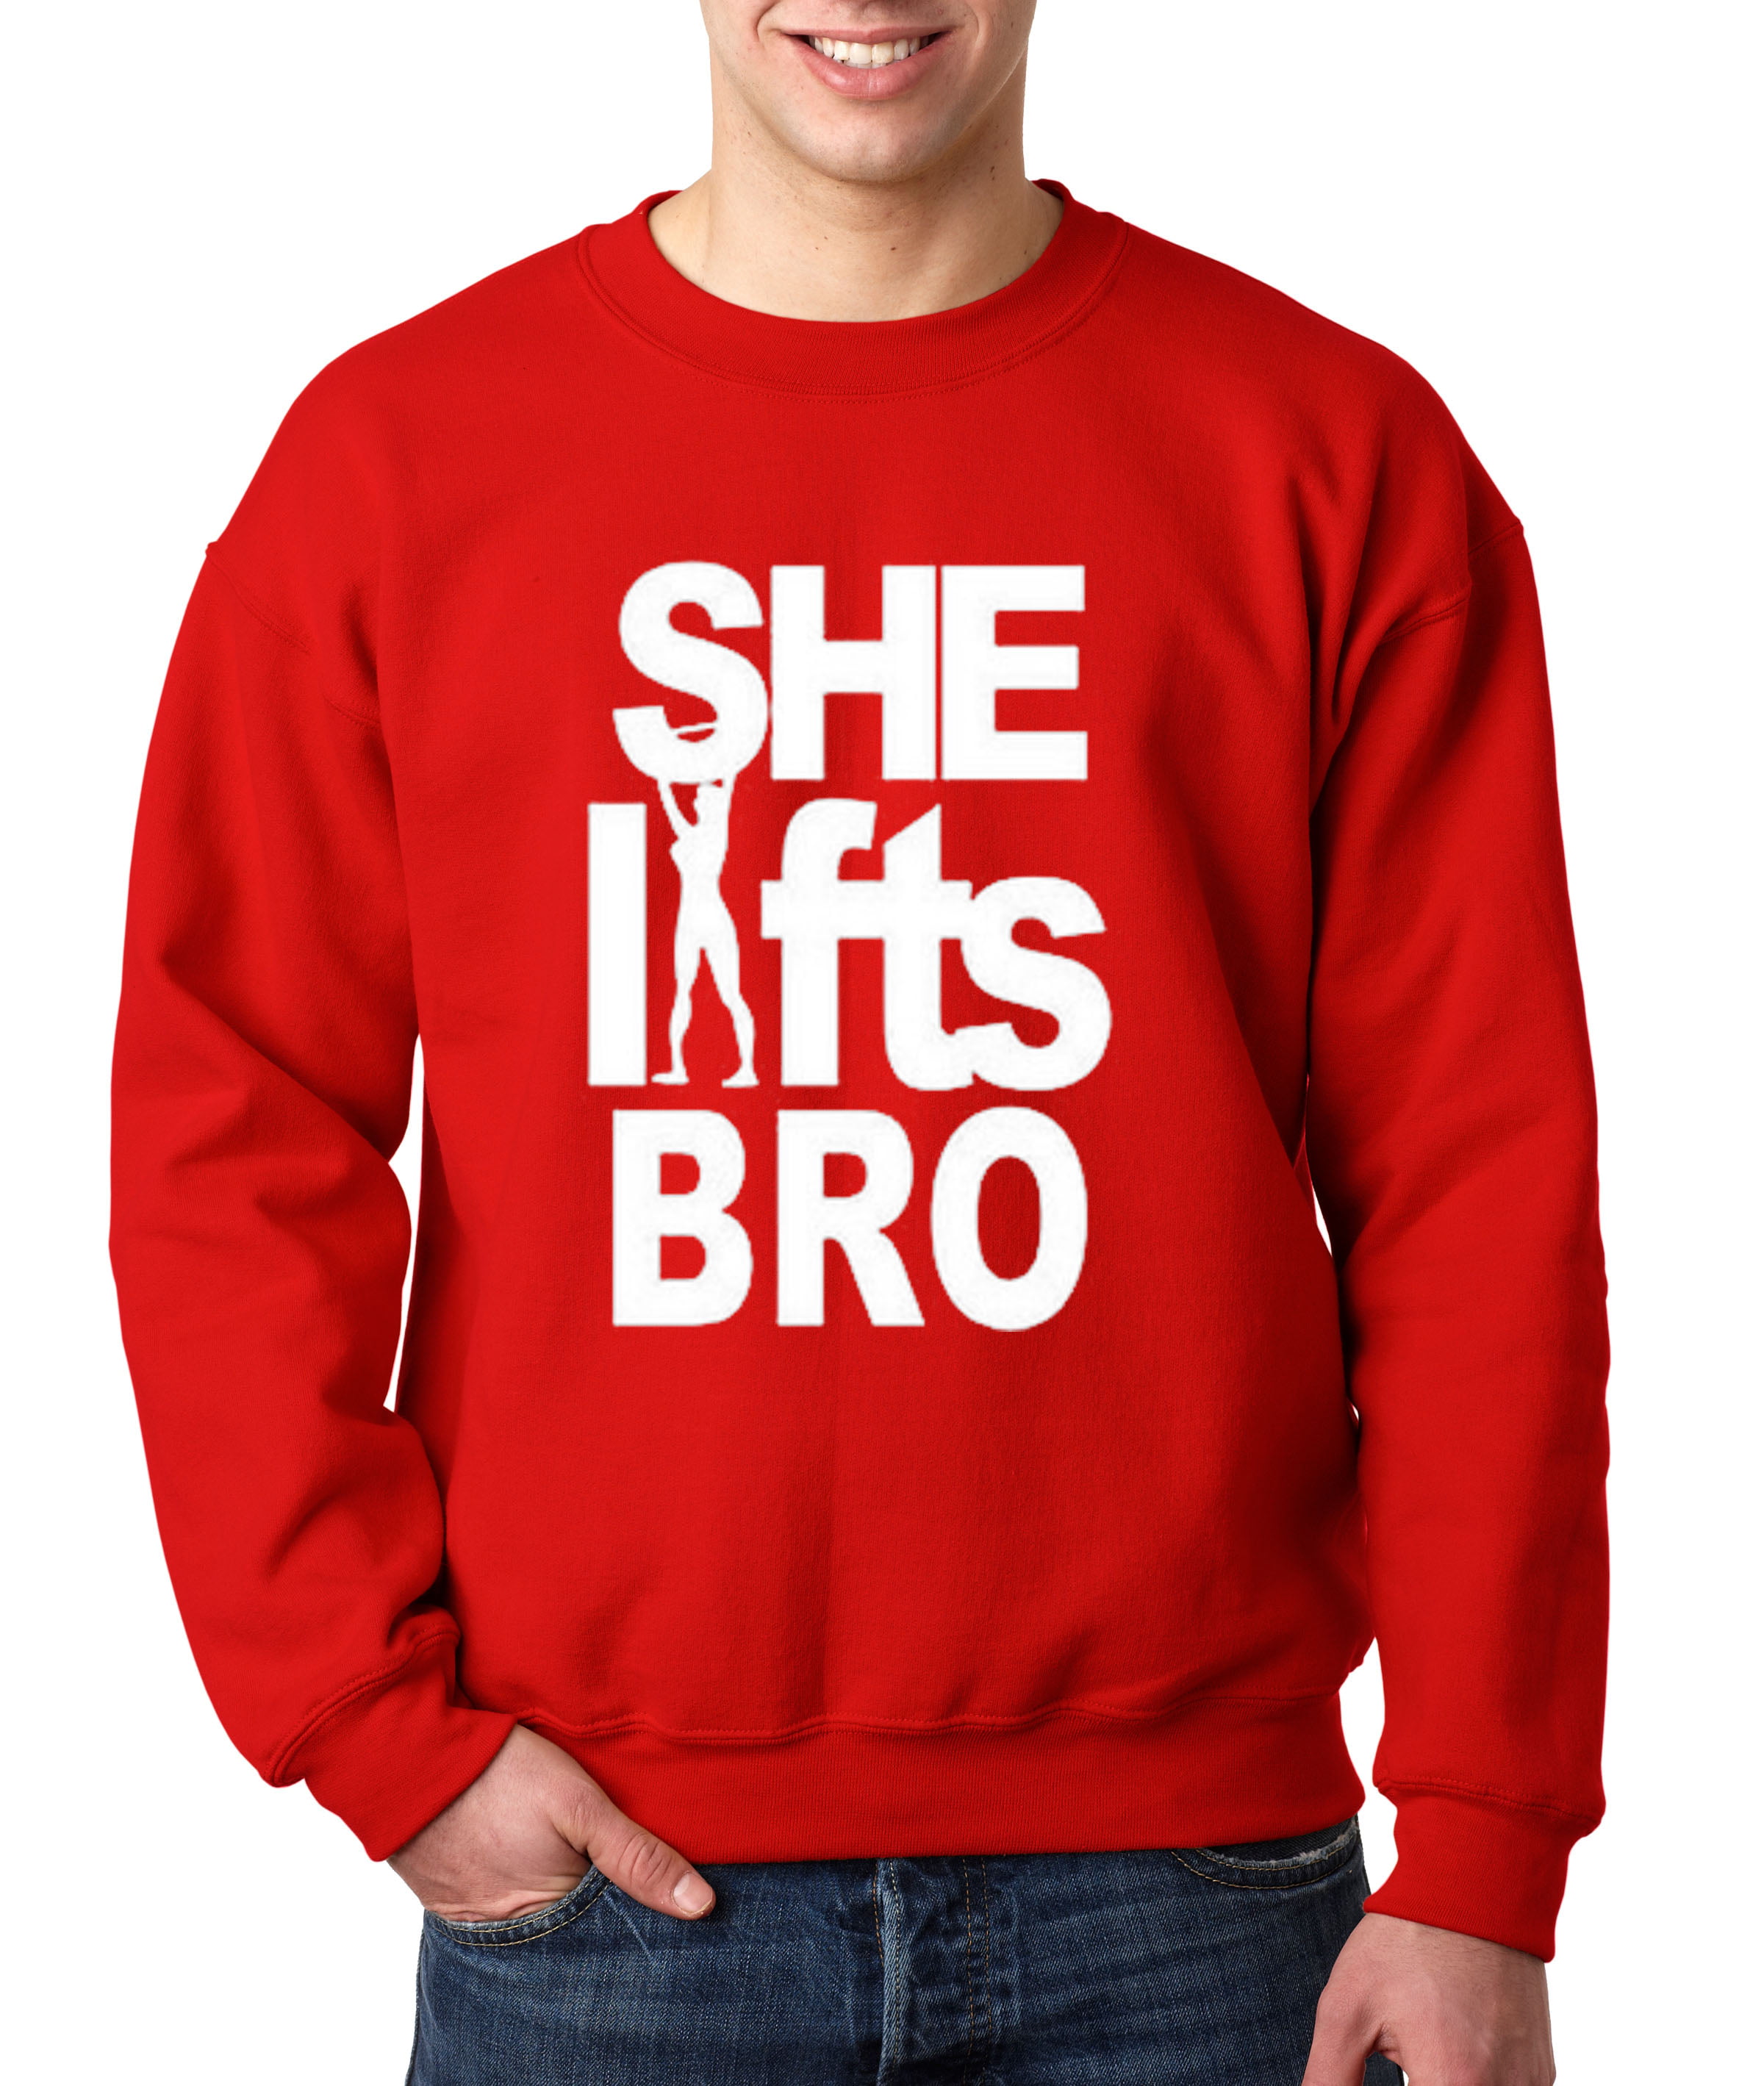 Jughead Jones Hoodies Women Casual Hipster Tv Shows Pullover Fleece Sweatshirt red XL